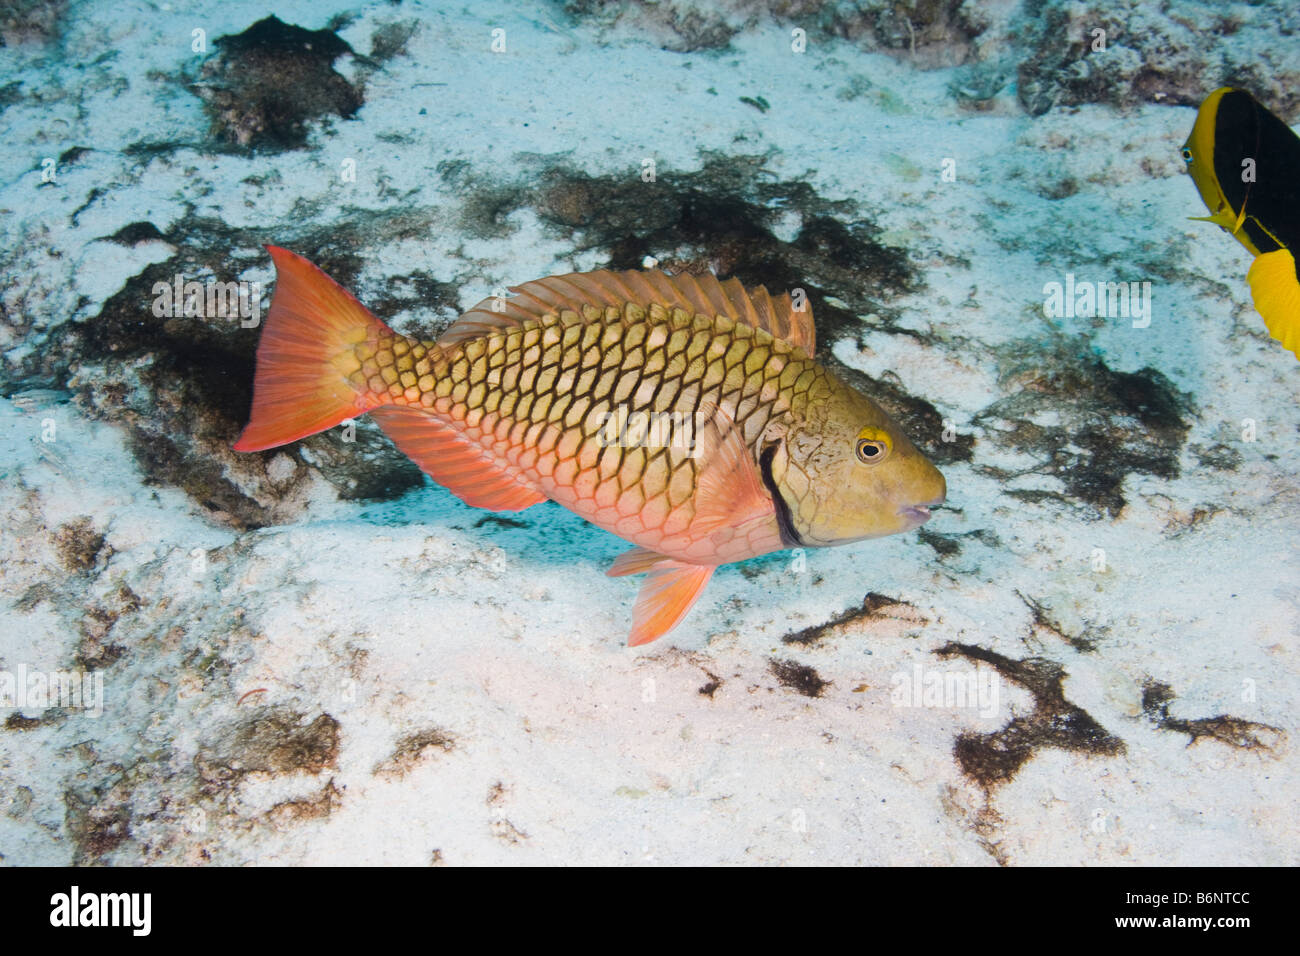 Un redtail pesci pappagallo, Sparisoma chrysopterum, femmina o maschio iniziale fase, Bonaire, Antille olandesi, dei Caraibi. Foto Stock